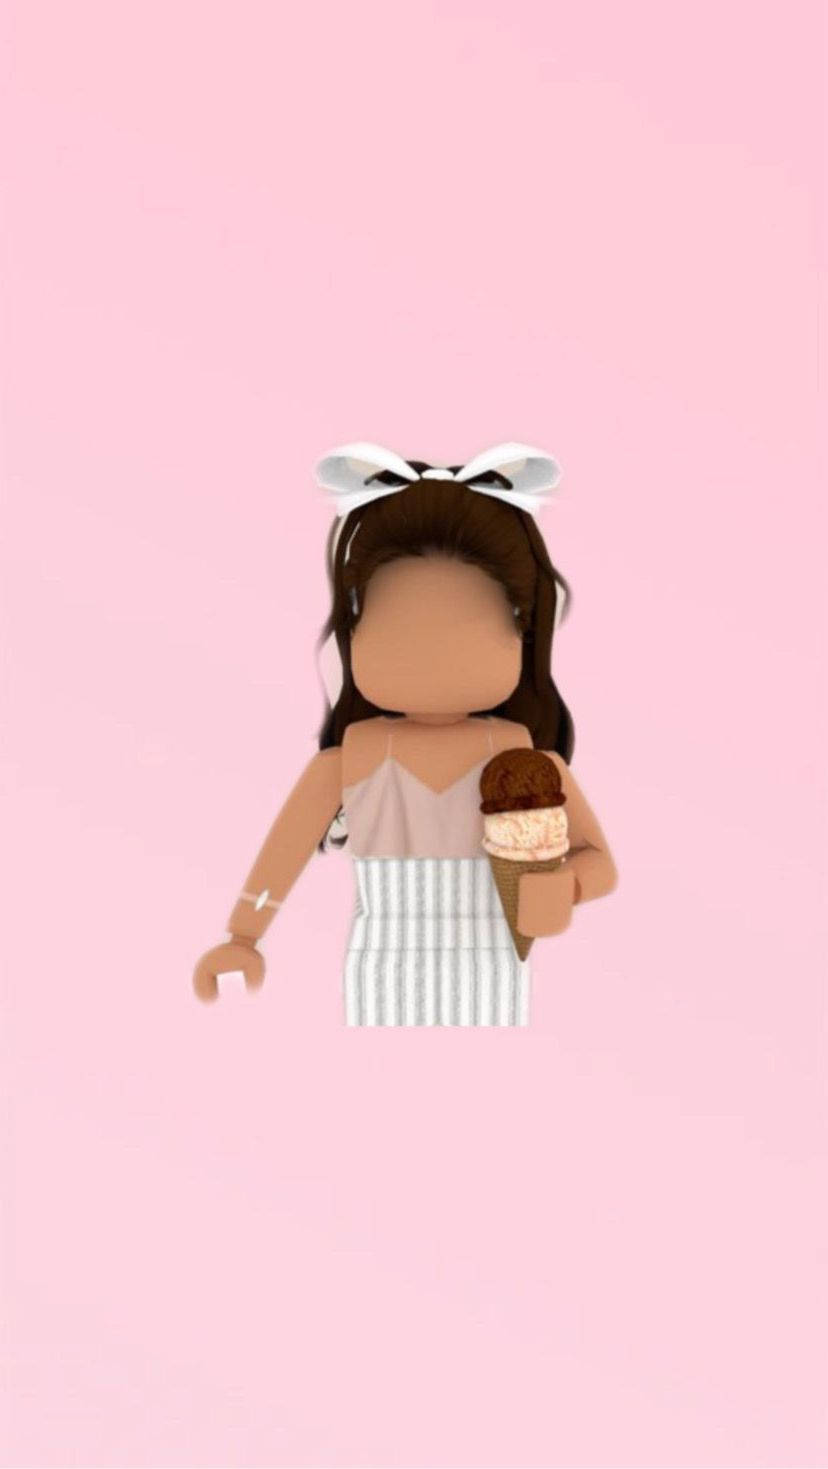 Aesthetic Roblox Girl With Ice Cream